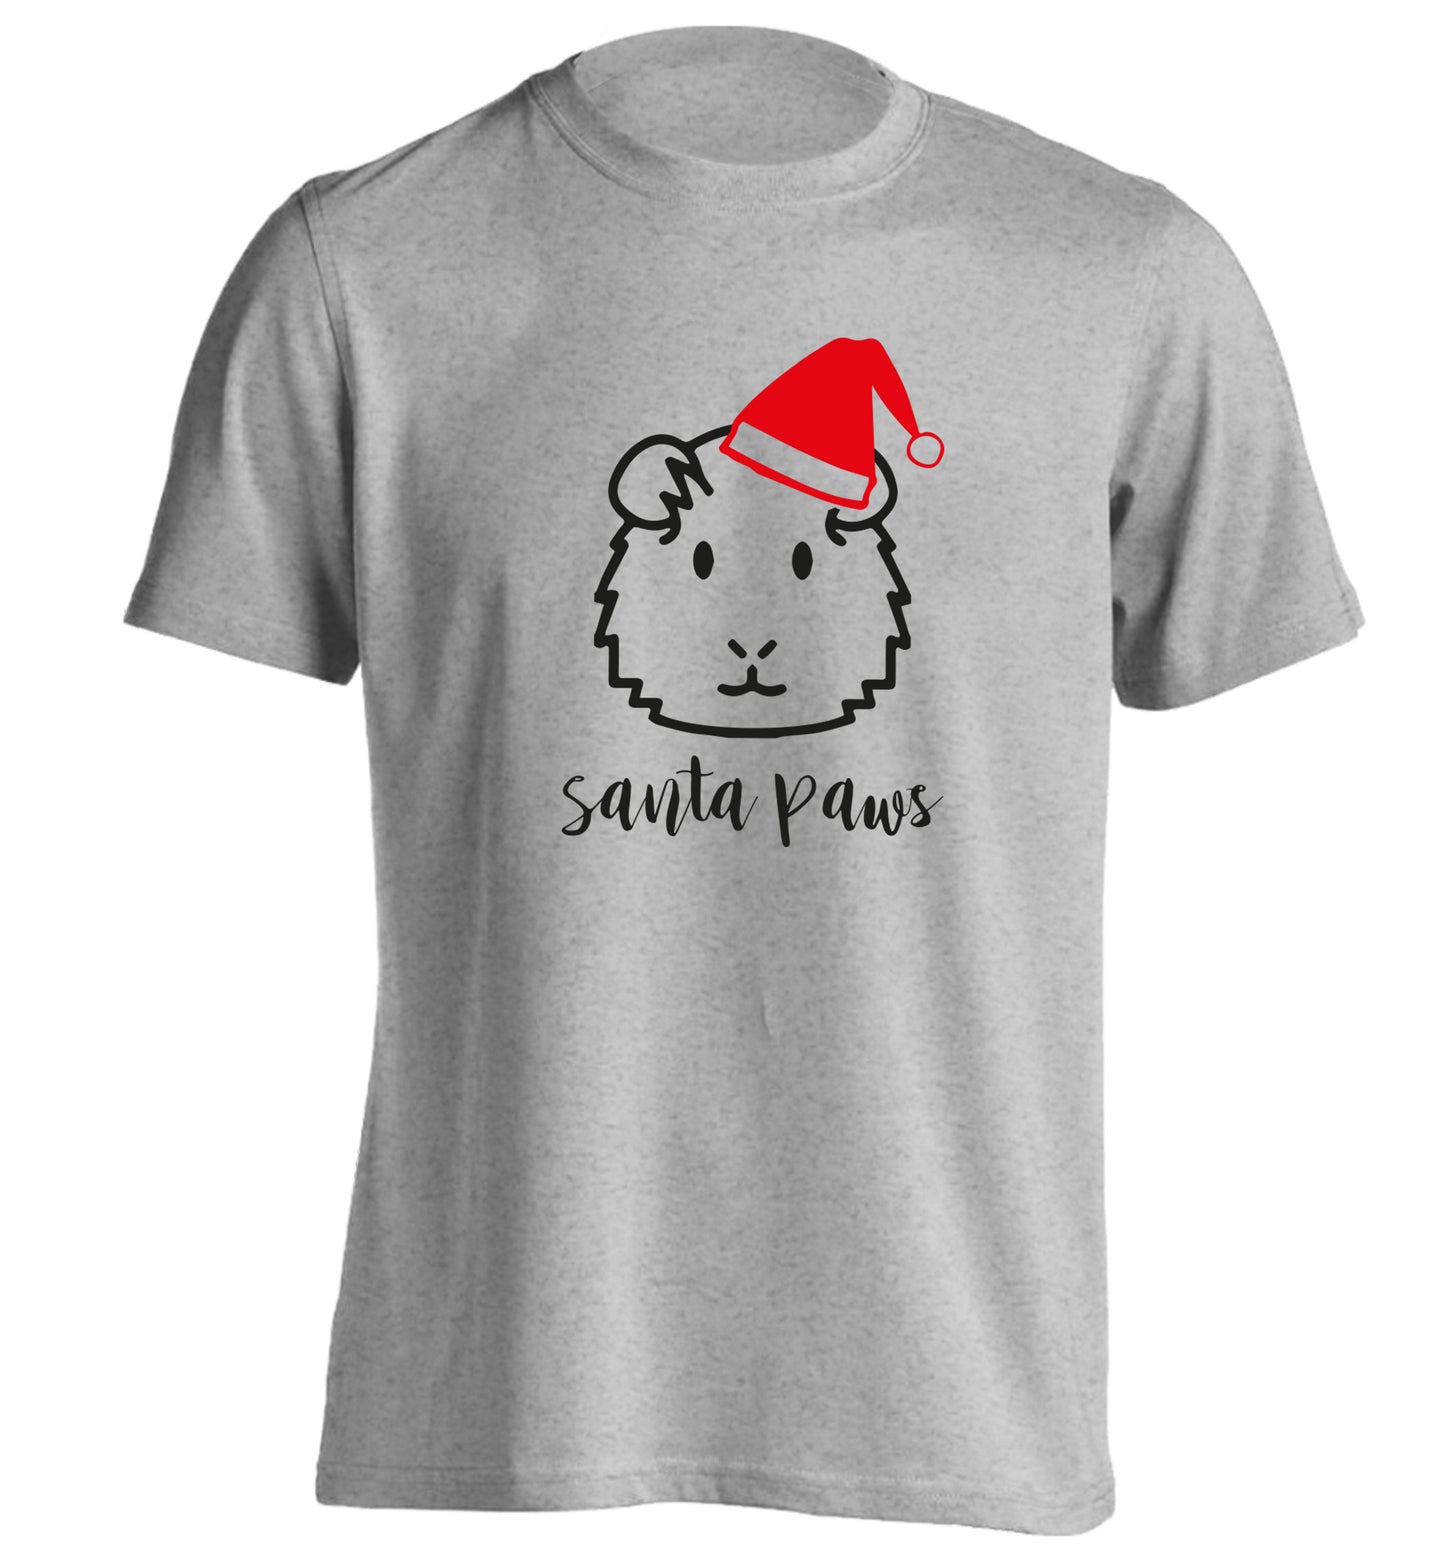 Guinea pig Santa Paws adults unisex grey Tshirt 2XL